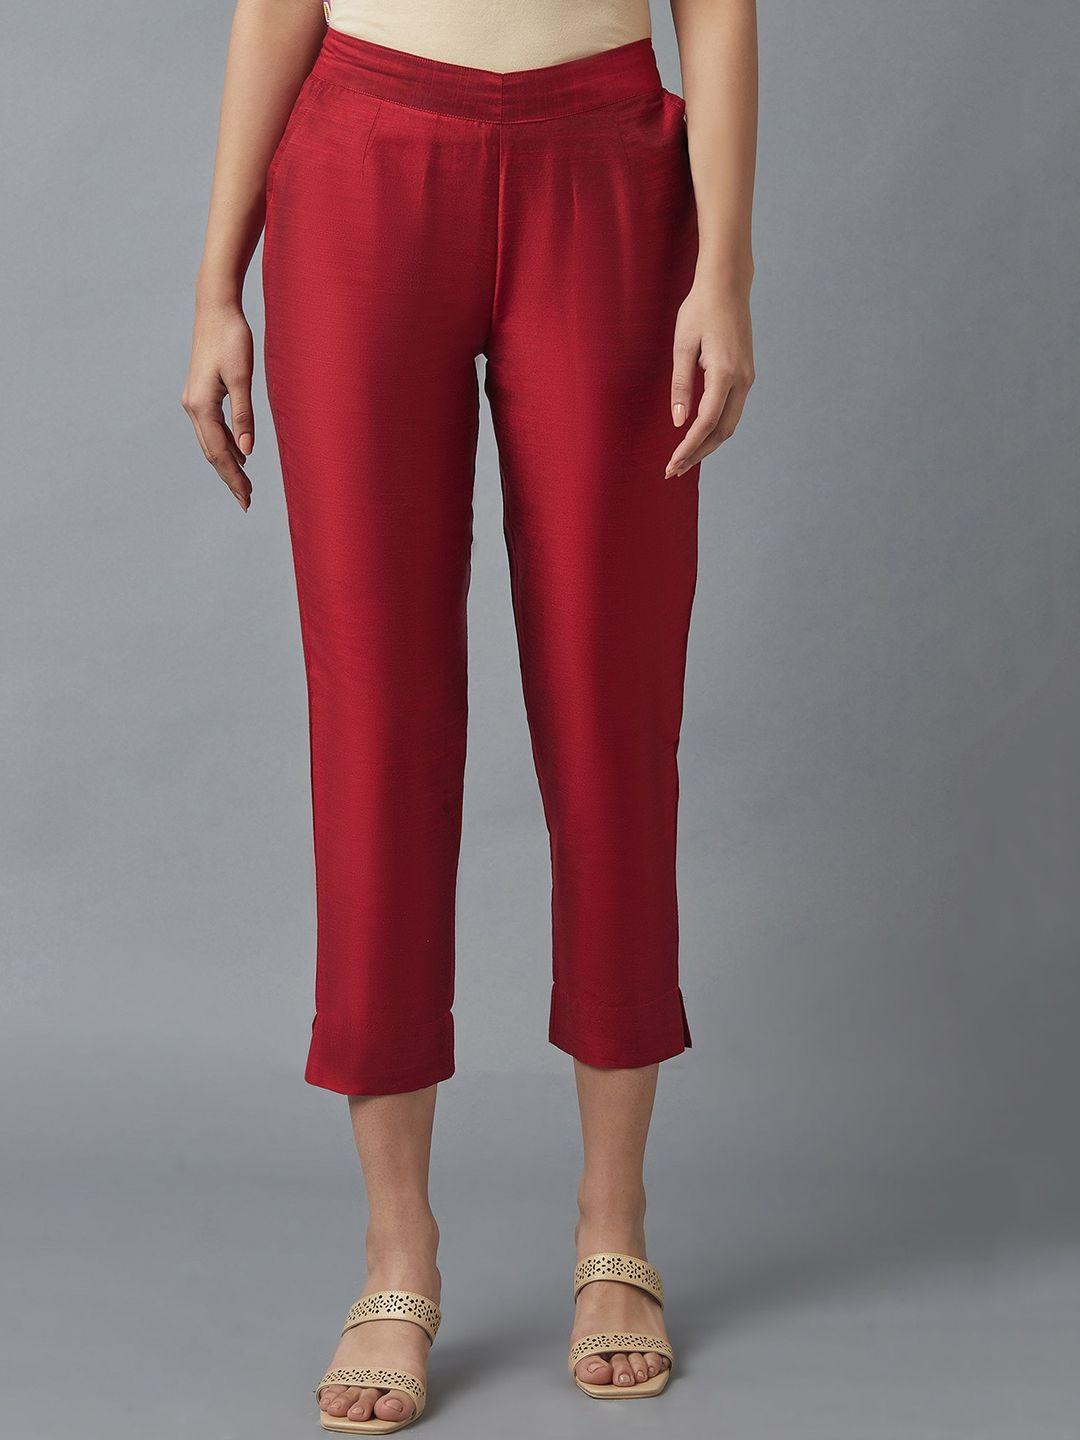 elleven women red regular fit cropped trousers